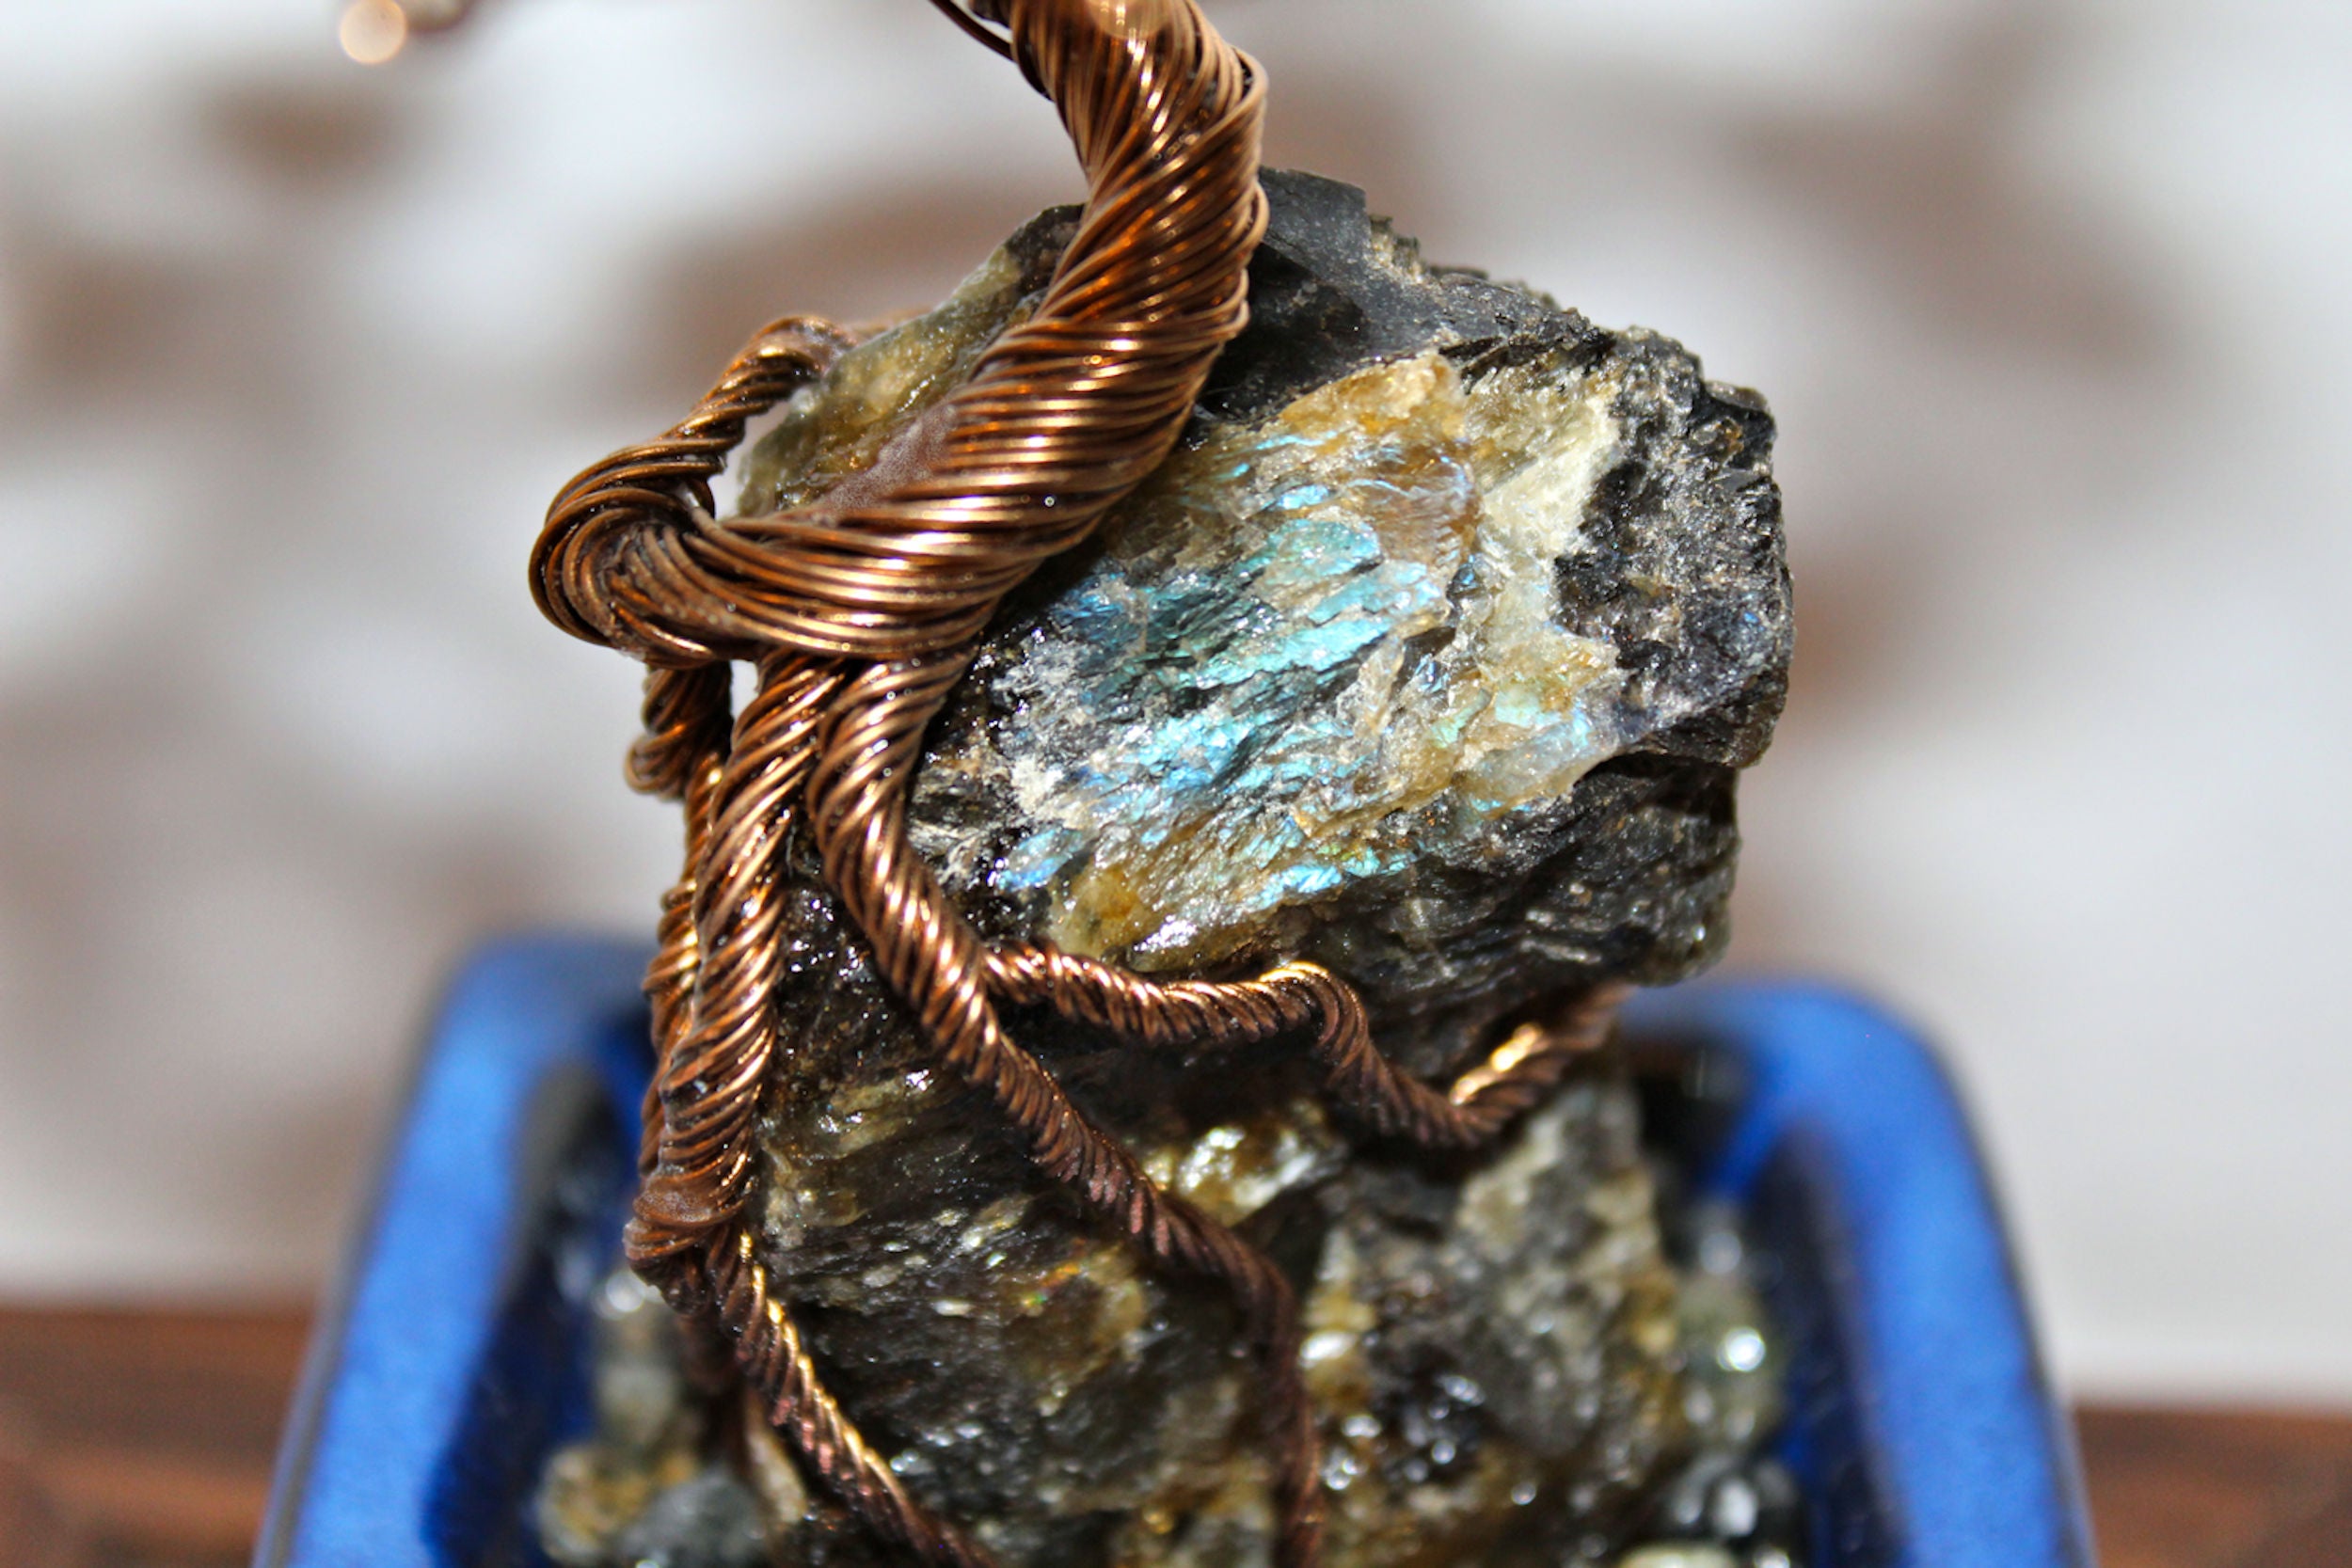 Root-over-Rock Seki-joju Bonsai with Iridescent Labradorite - SOLD